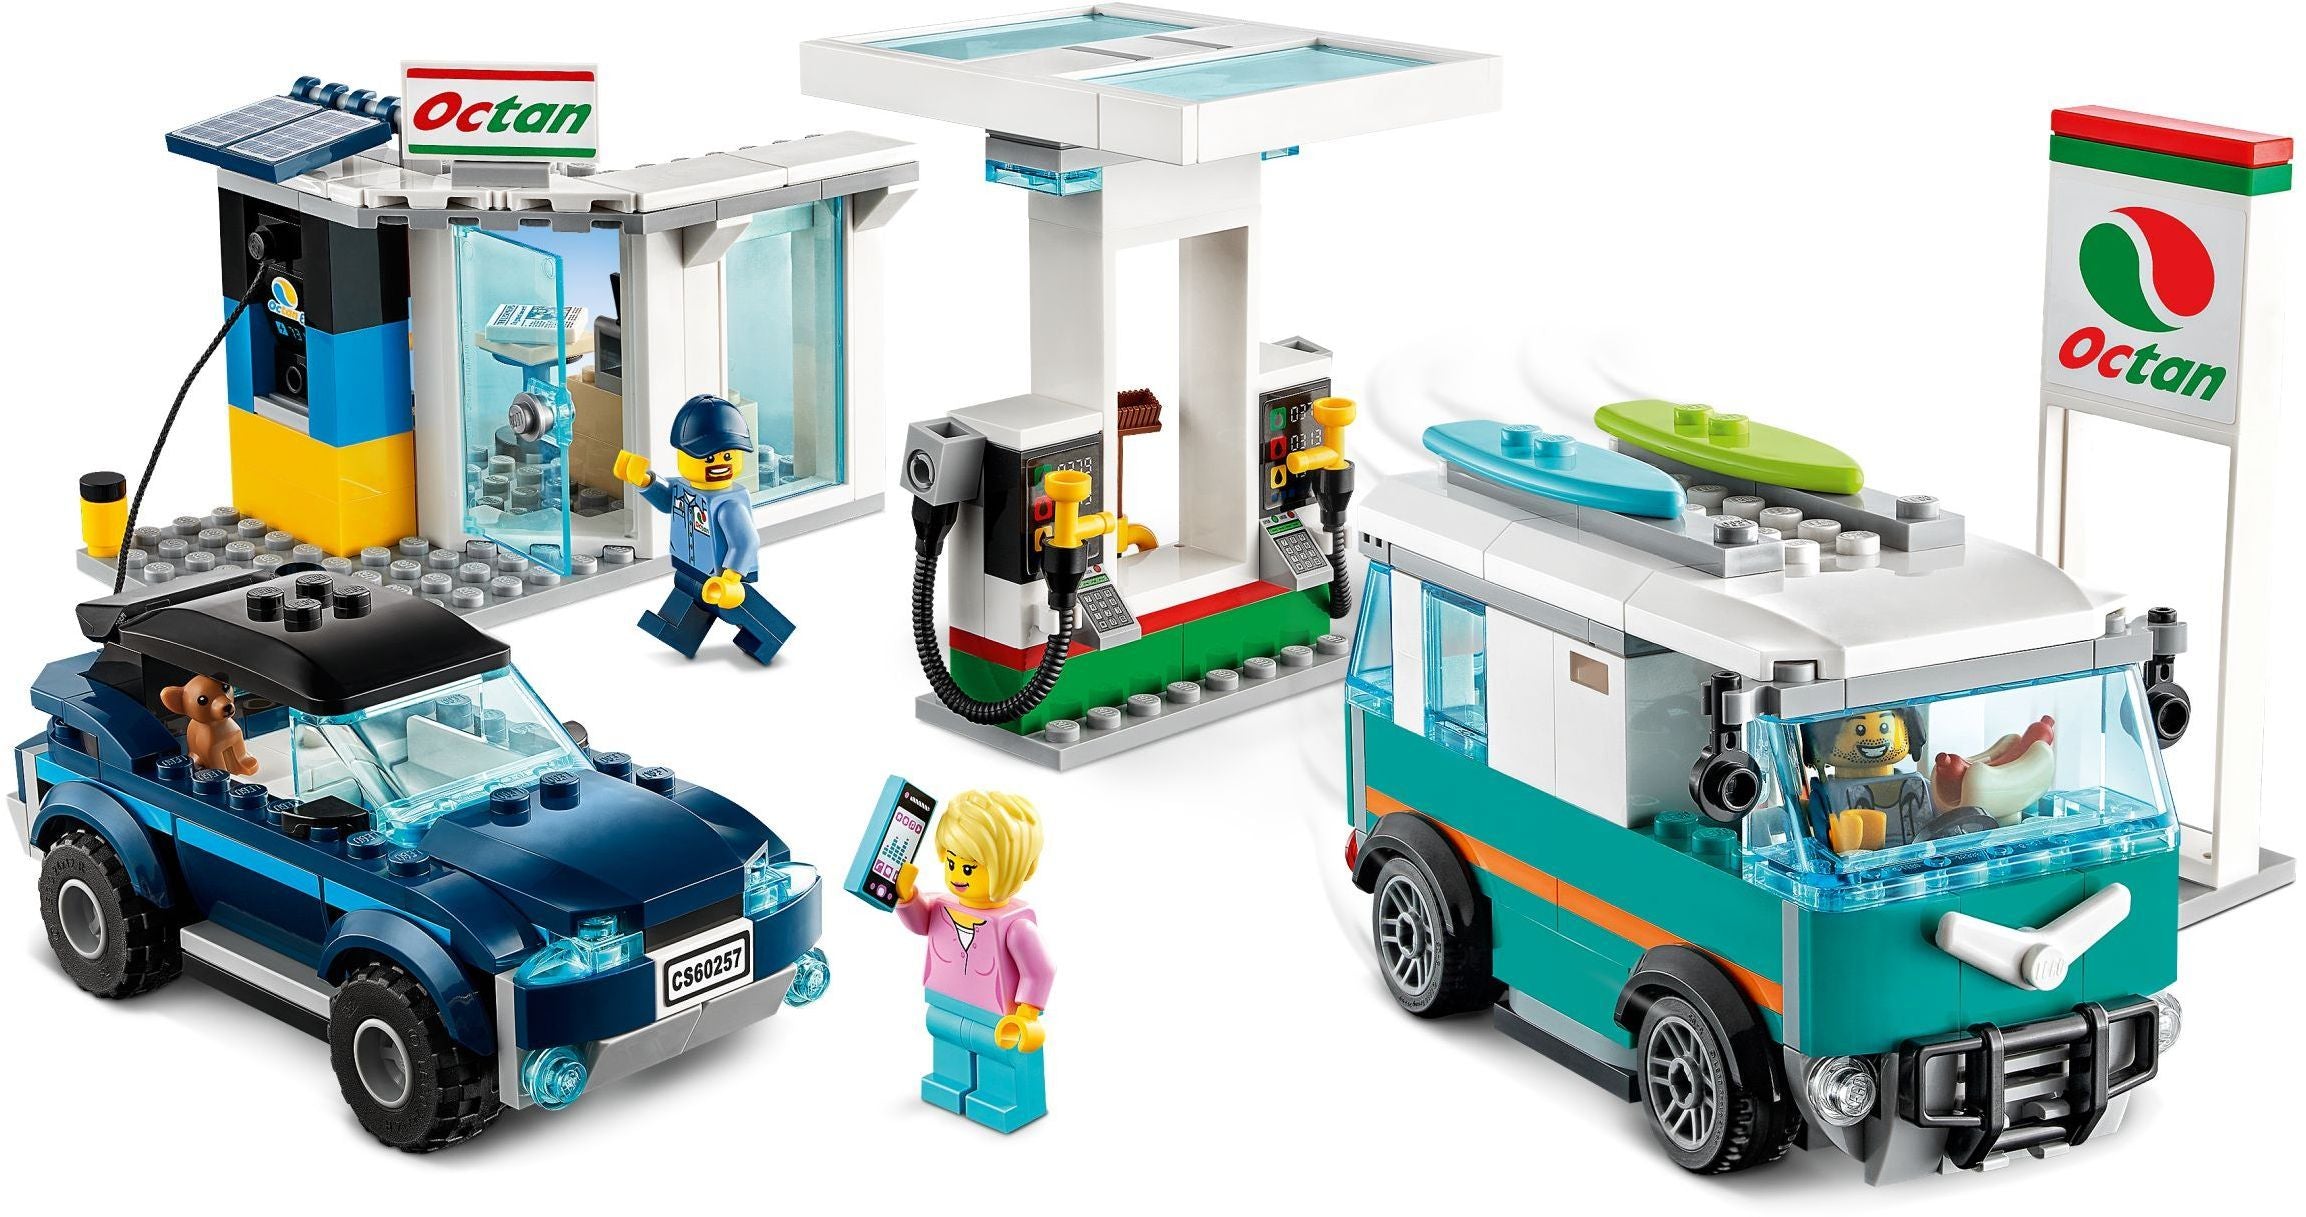 LEGO 60257 Service Station